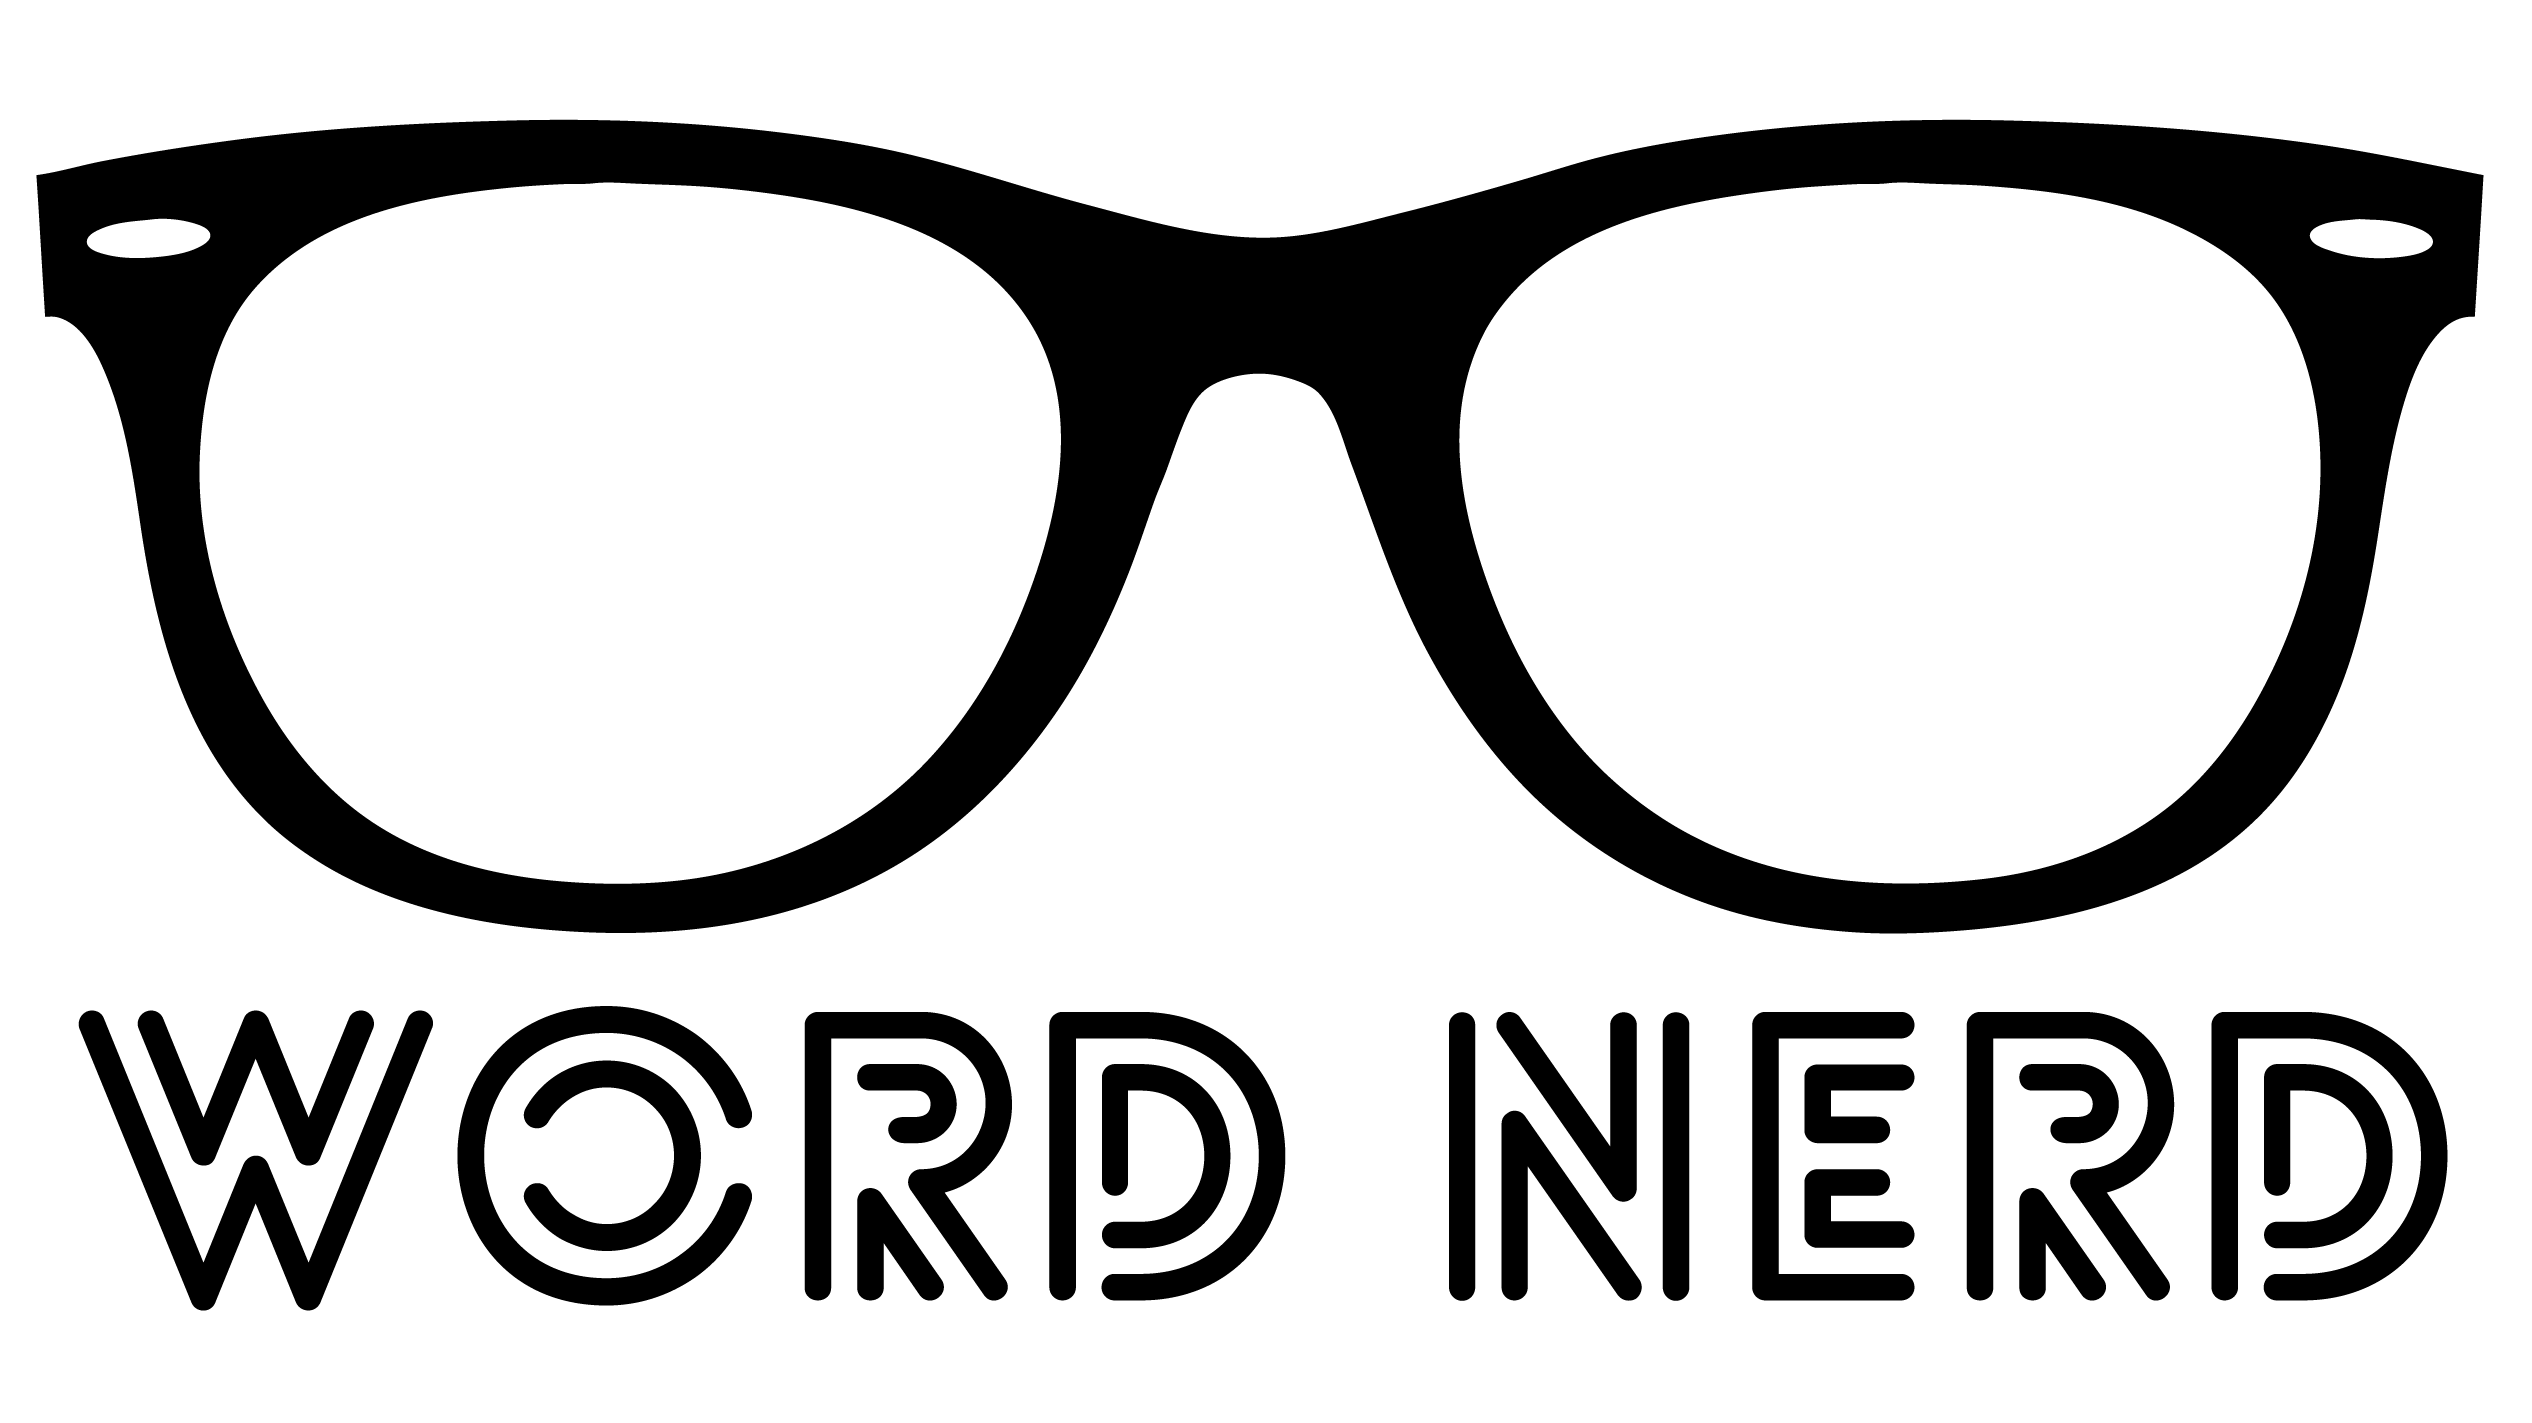 Word Nerd Logo